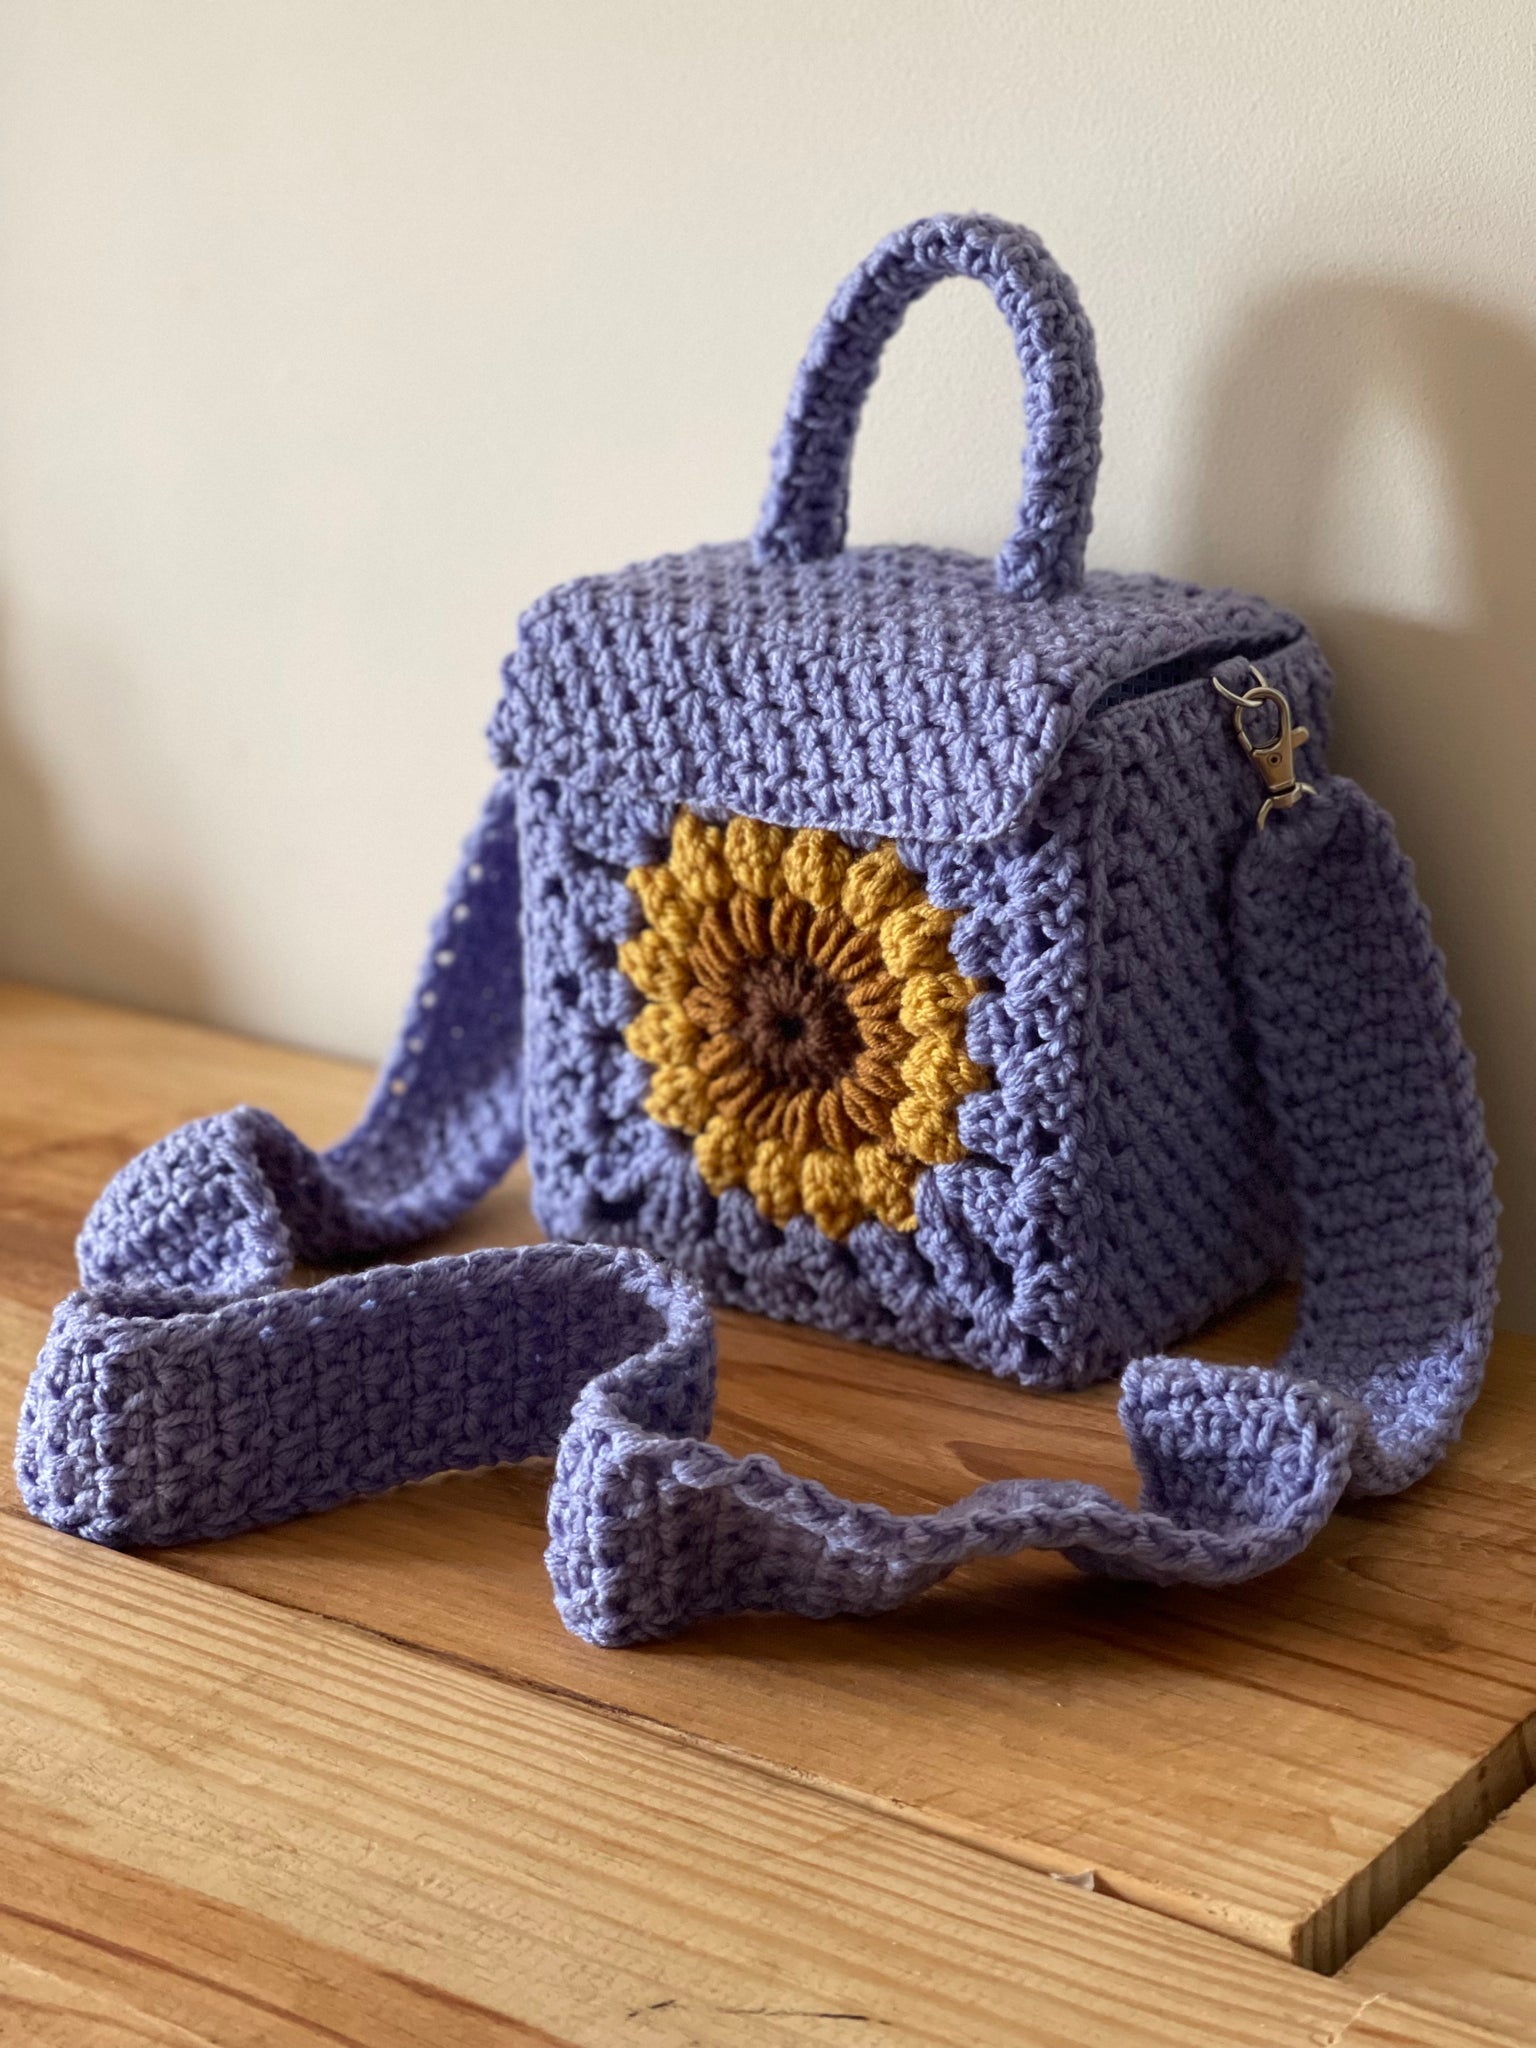 Crochet Sunflower Crossbody Bag Small Lined Granny Square 